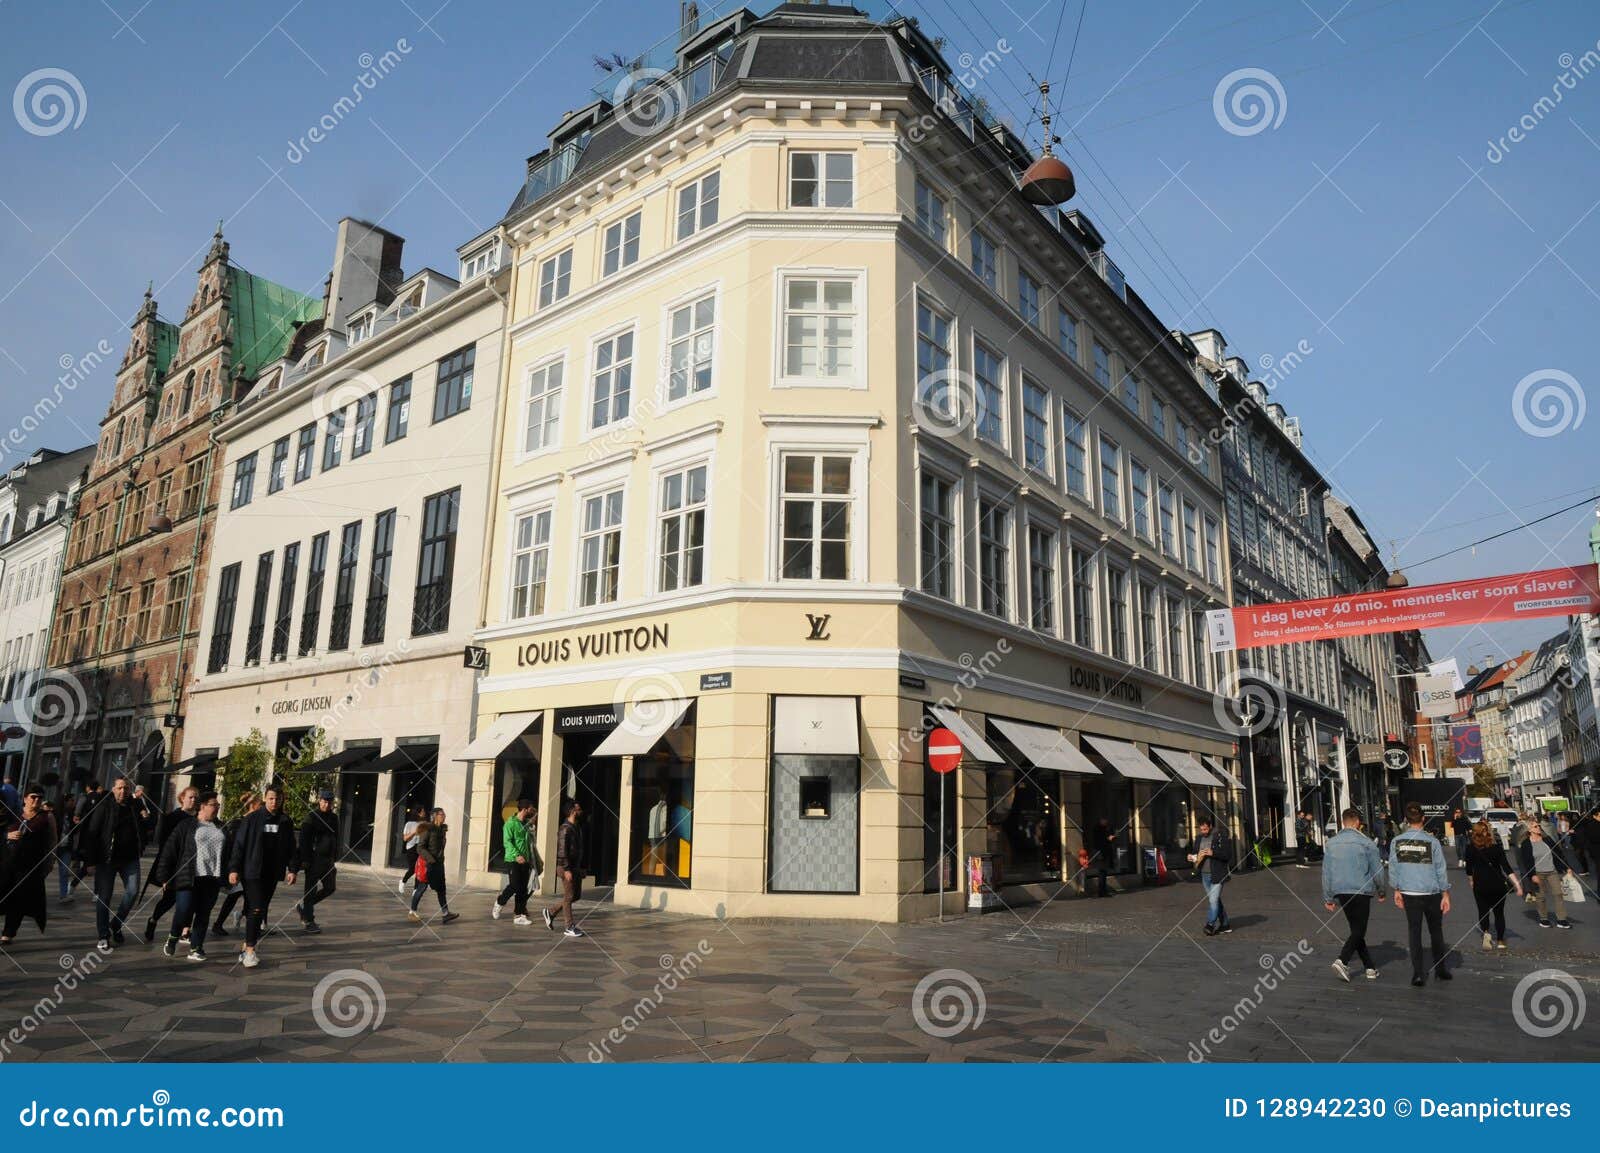 Vuitton Store N Denmark Stock Photo 128942230 -